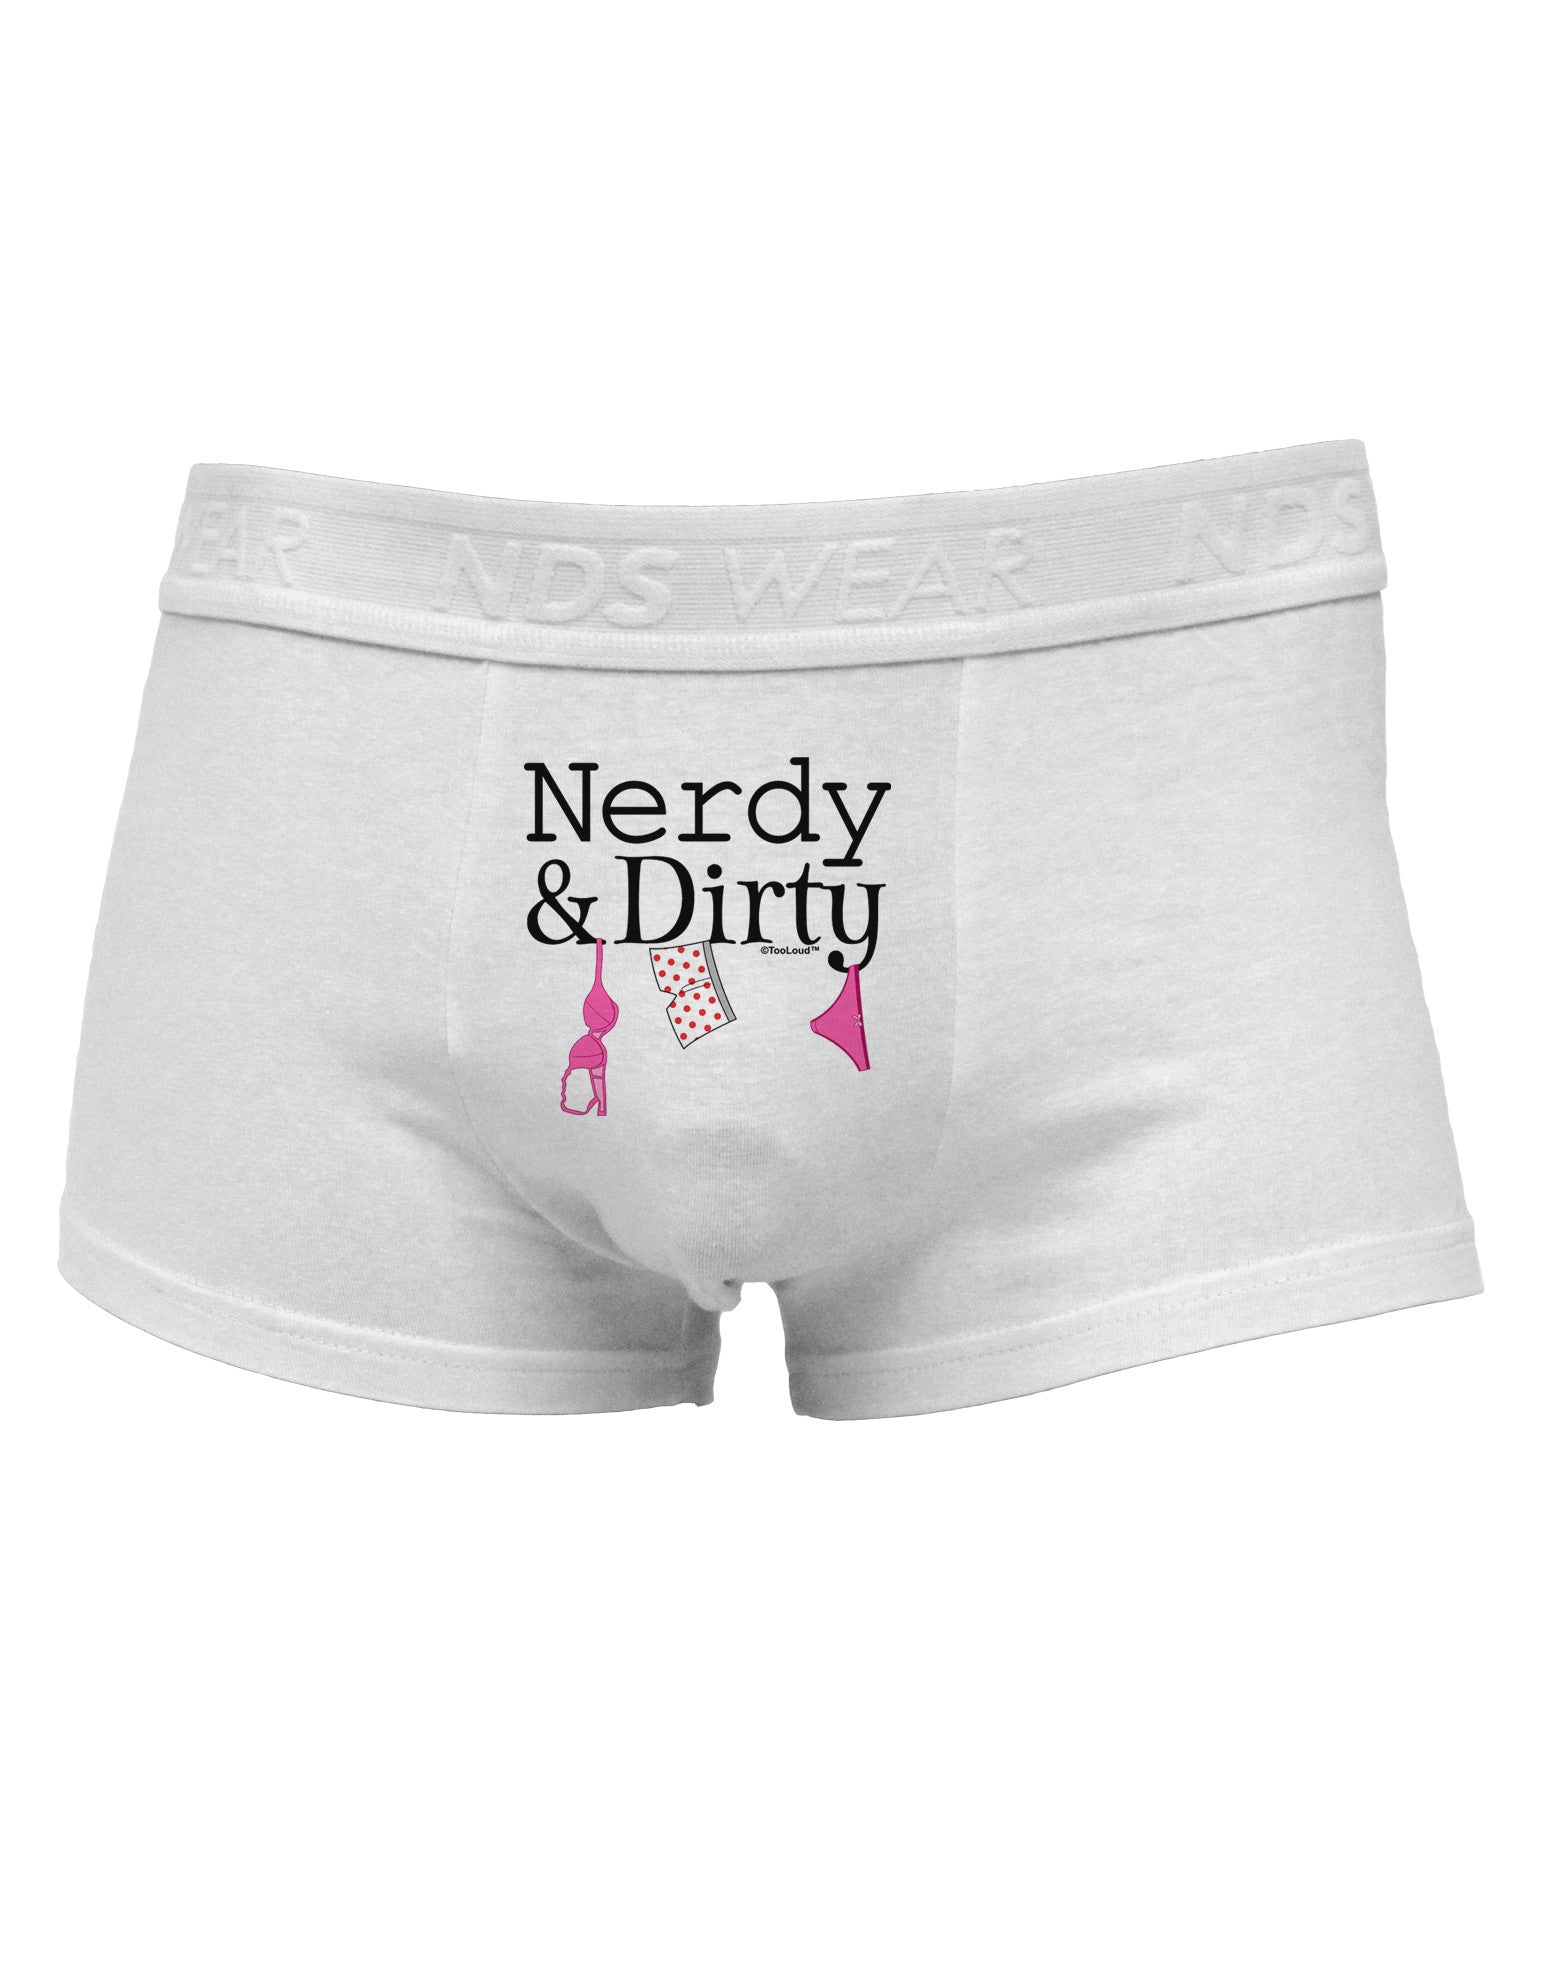 Nerdy and Dirty Mens Cotton Trunk Underwear - Davson Sales